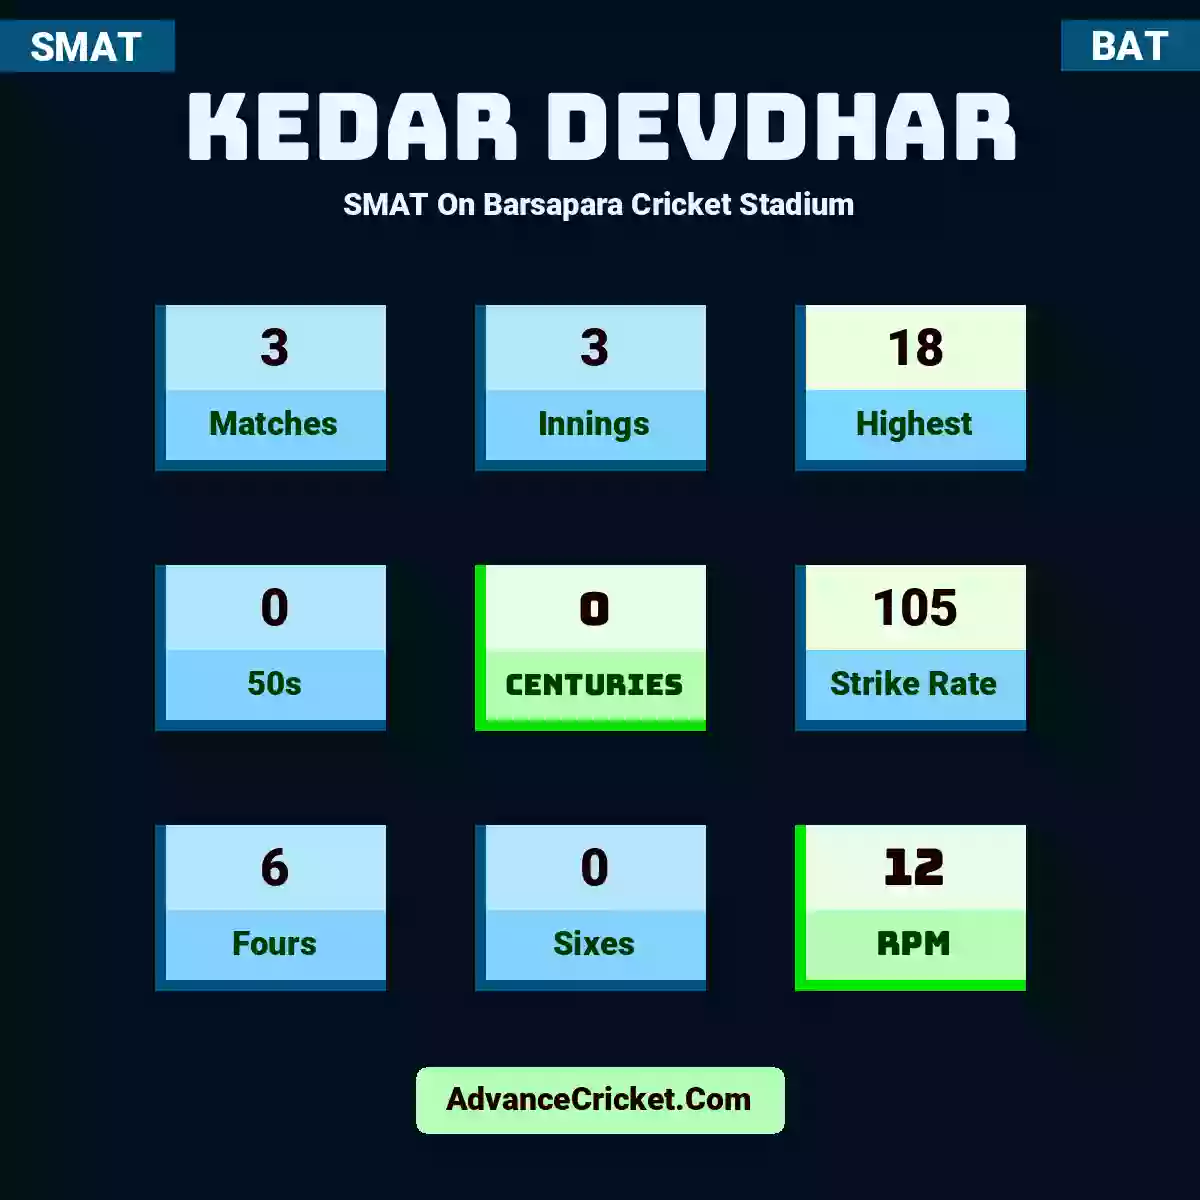 Kedar Devdhar SMAT  On Barsapara Cricket Stadium, Kedar Devdhar played 3 matches, scored 18 runs as highest, 0 half-centuries, and 0 centuries, with a strike rate of 105. K.Devdhar hit 6 fours and 0 sixes, with an RPM of 12.